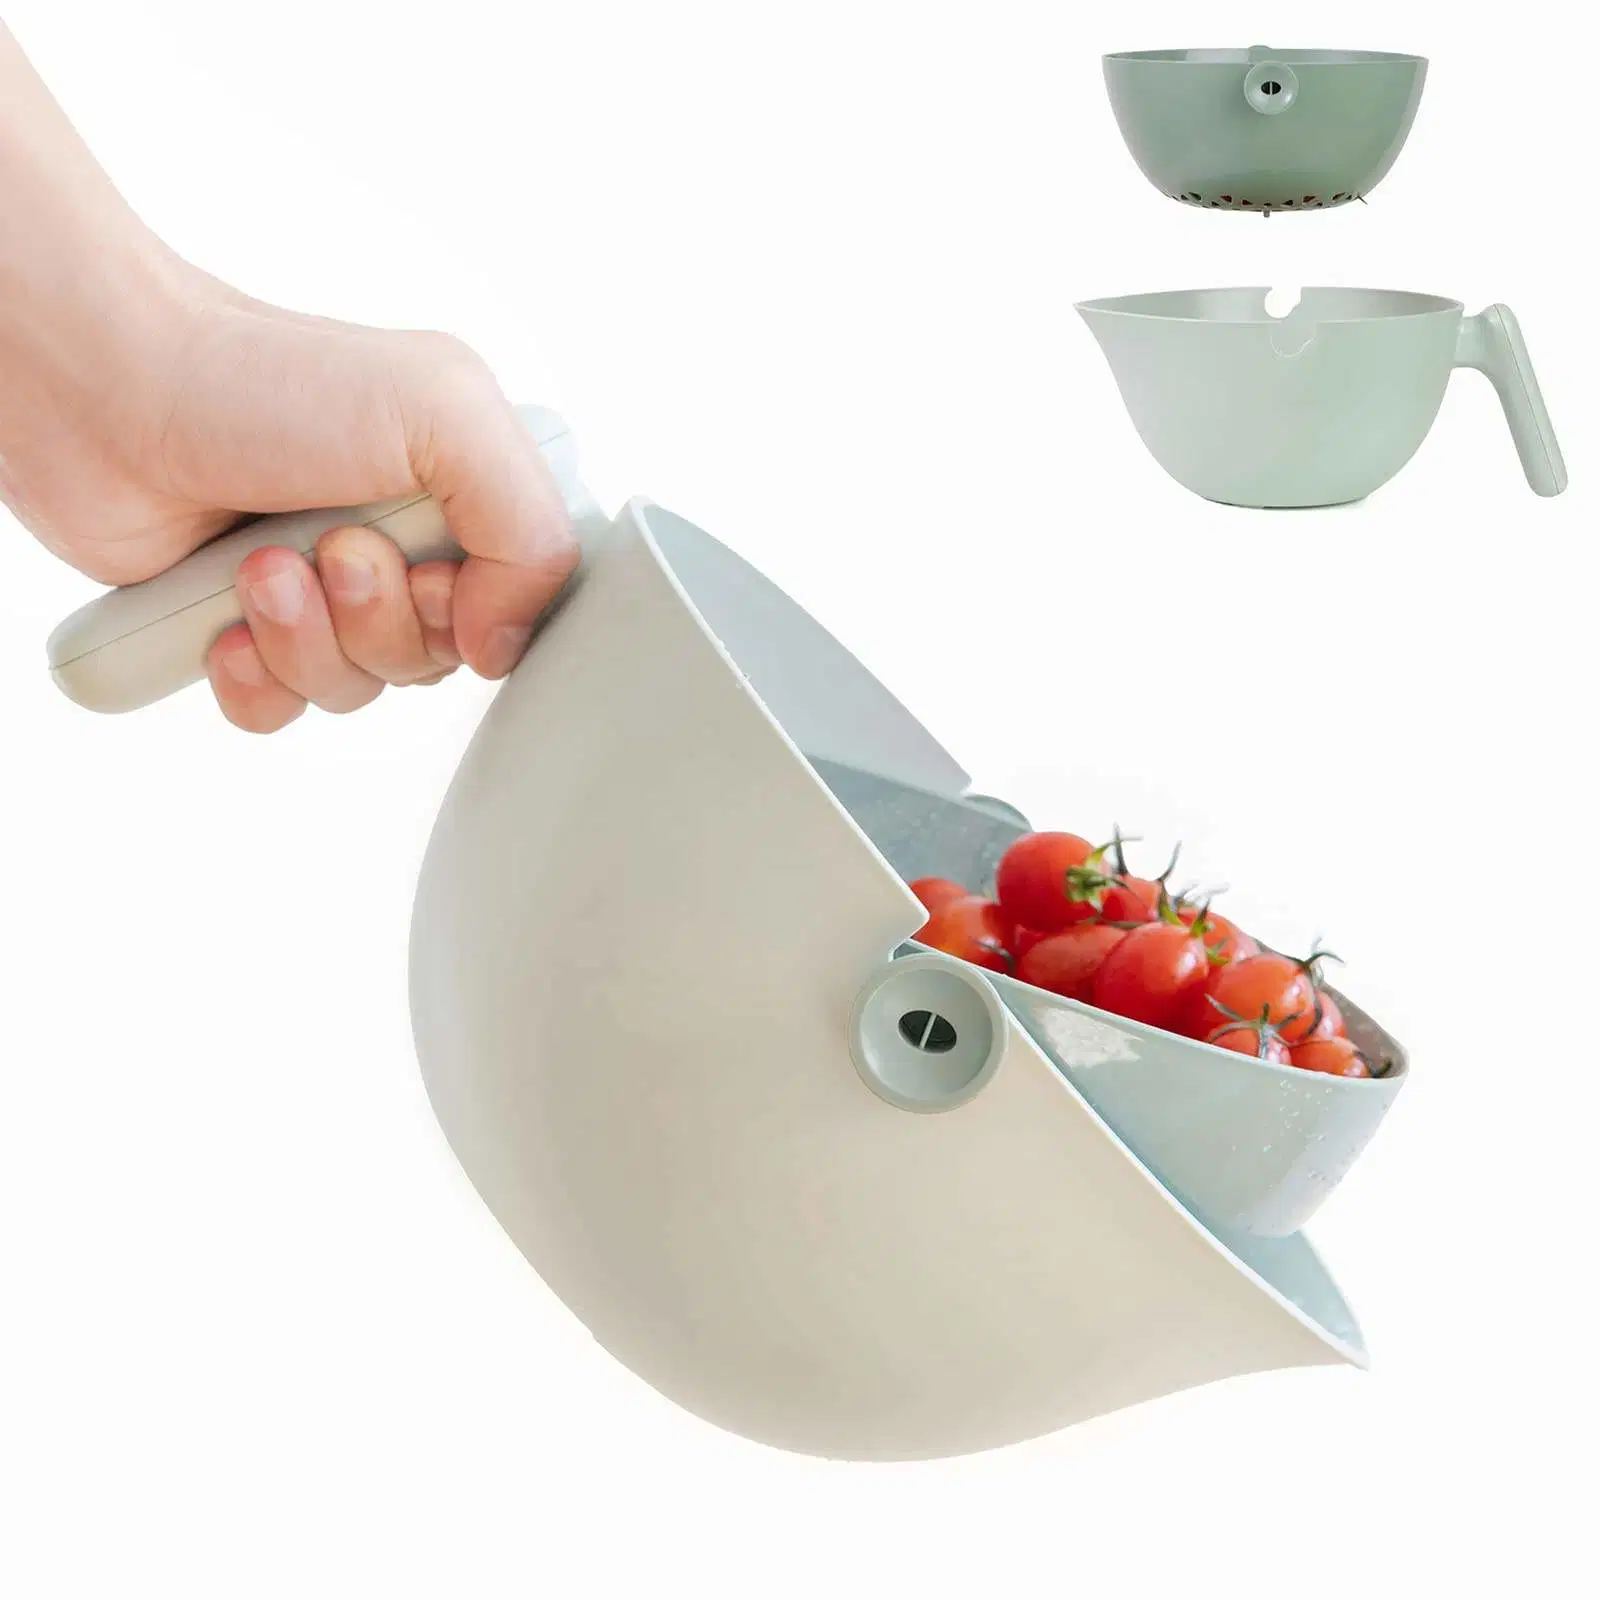 Fruit Wash Colander Drain Basket Strainer Bowl Set Kitchen Creative Gadget Light Green 2 in 1 Colander Food Strainer with Handle